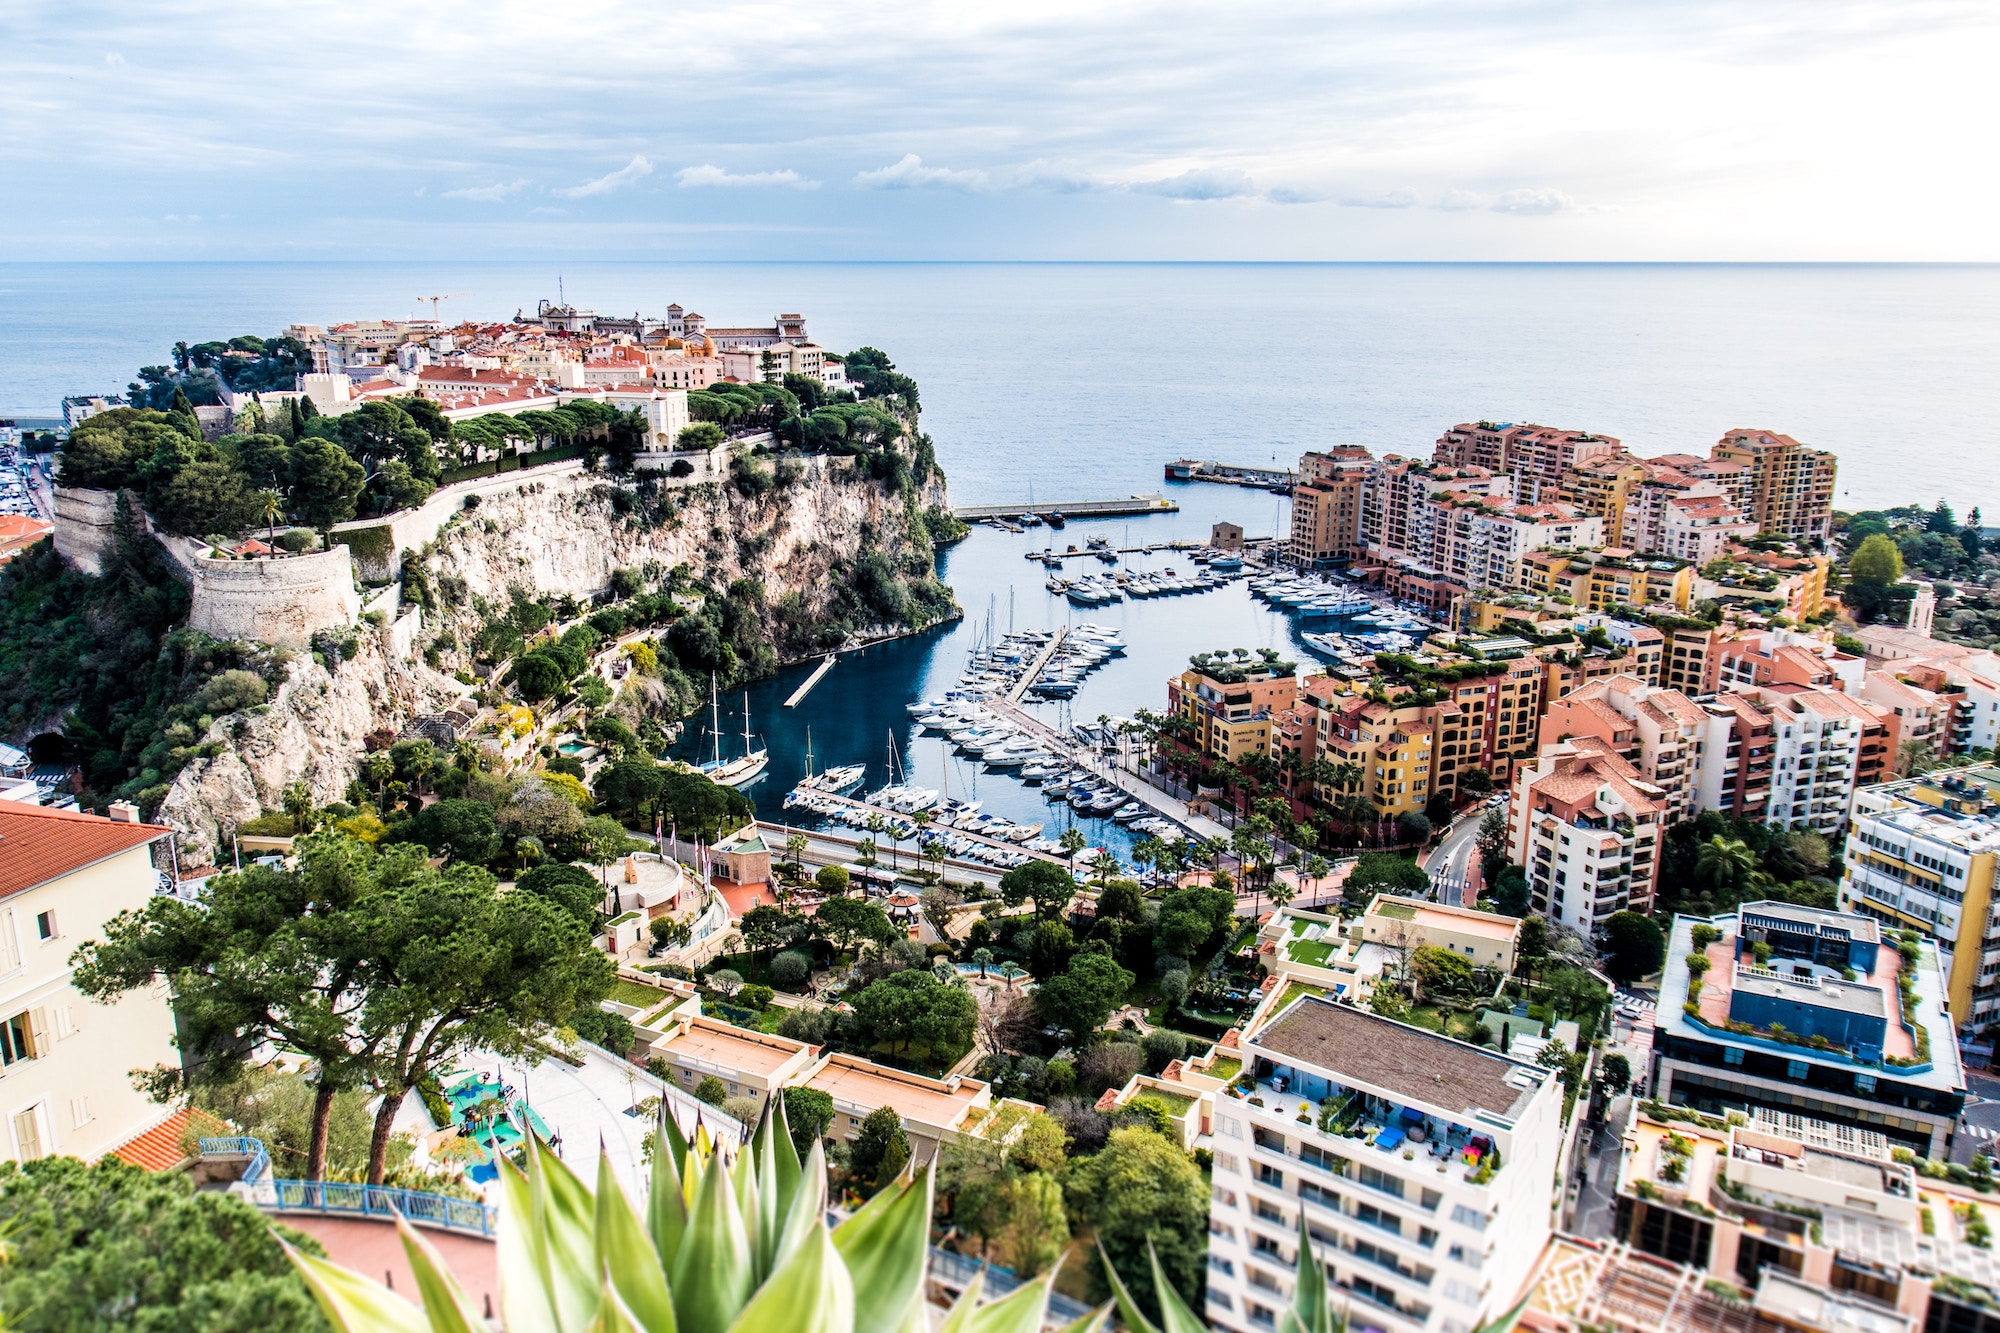 Miells - Monaco property and Monaco broker estate agents